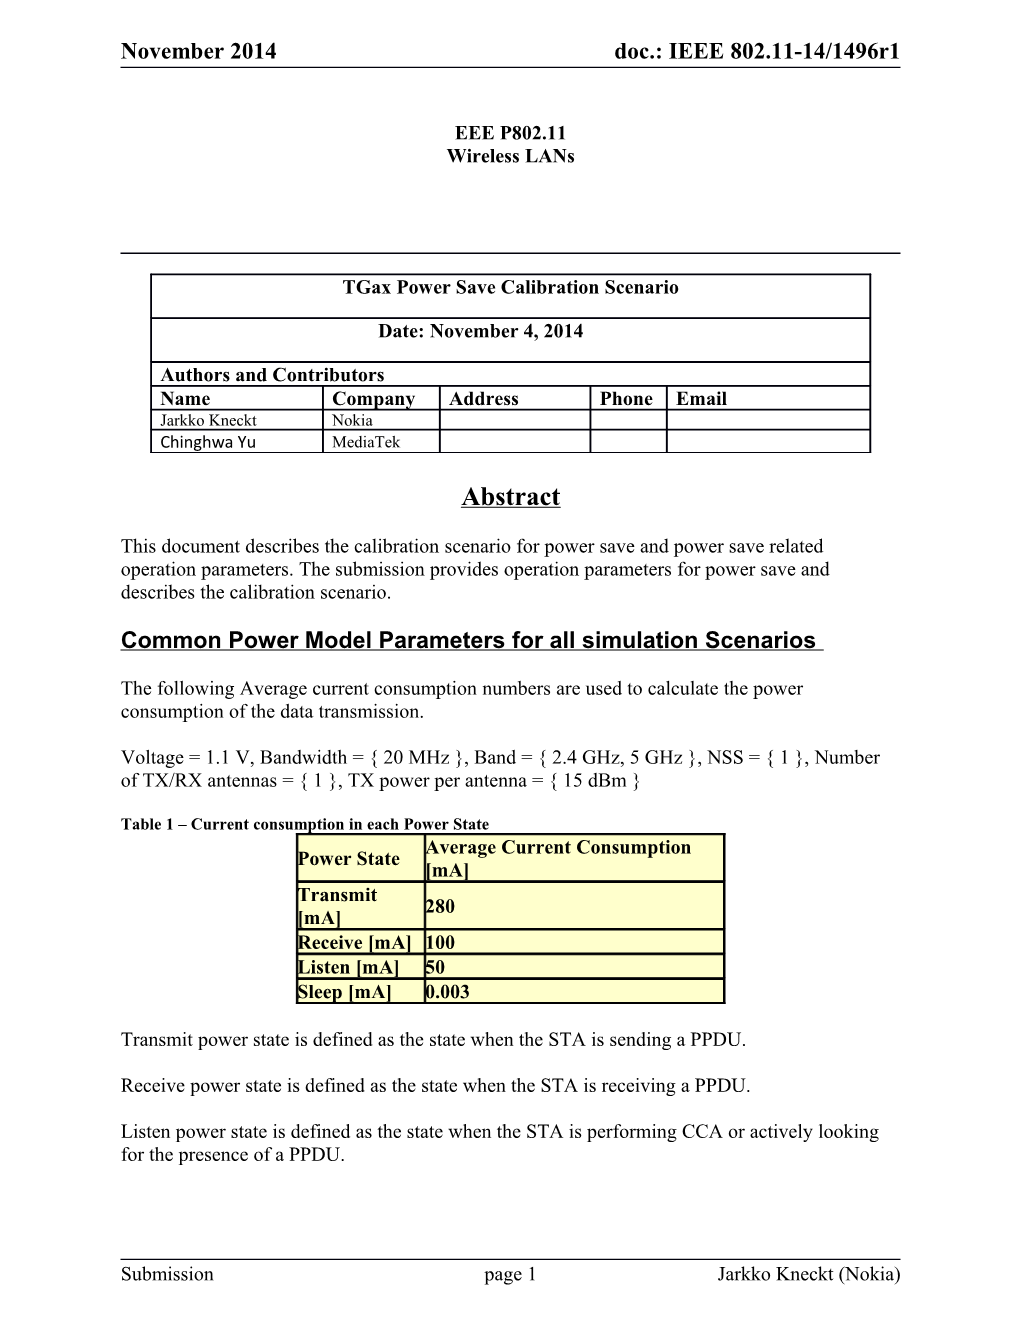 Common Power Model Parameters for All Simulation Scenarios